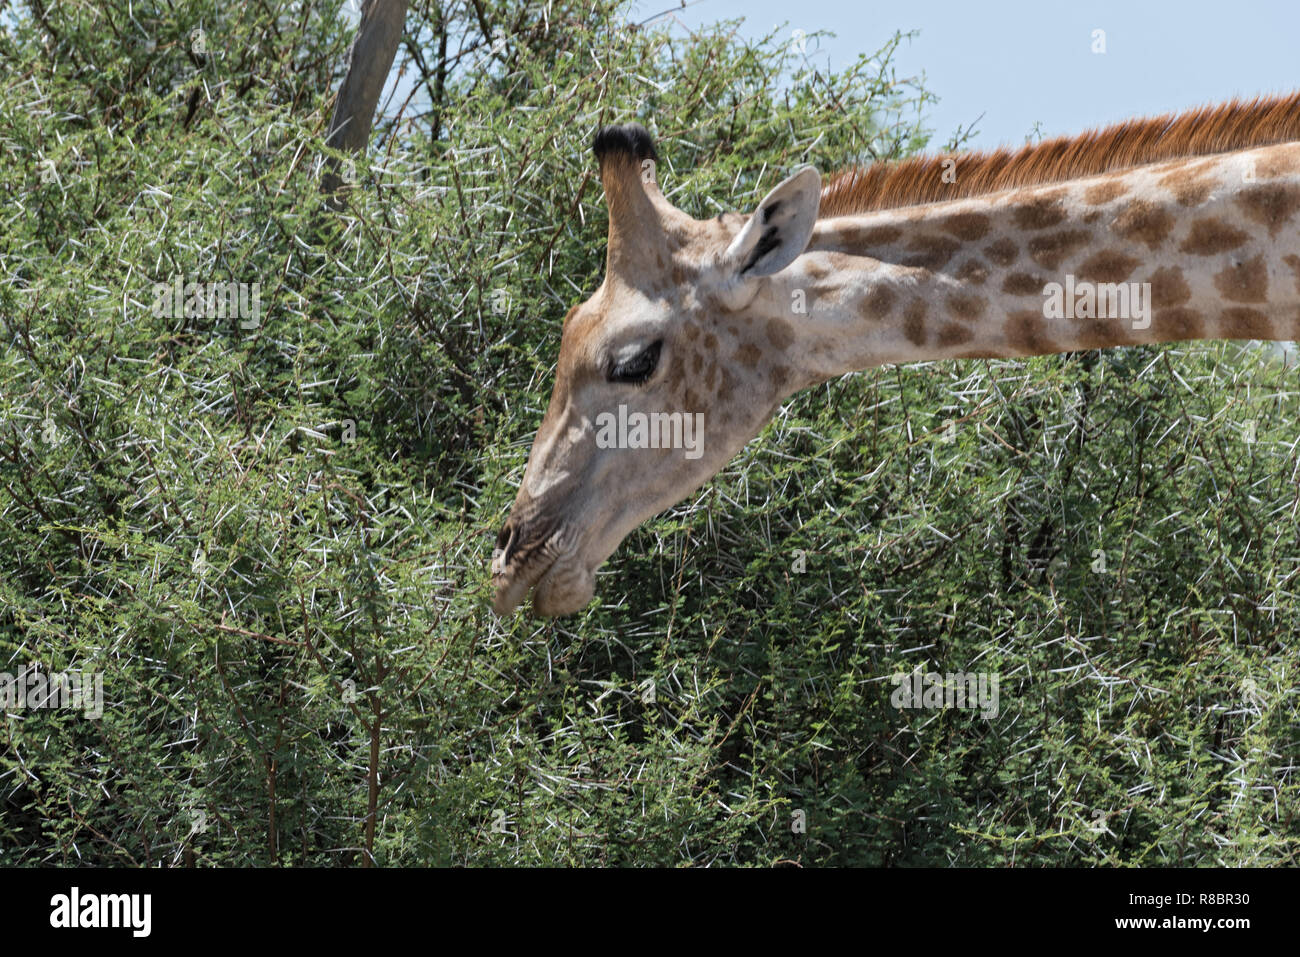 giraffe eating leaves from a large bush, Botswana Stock Photo